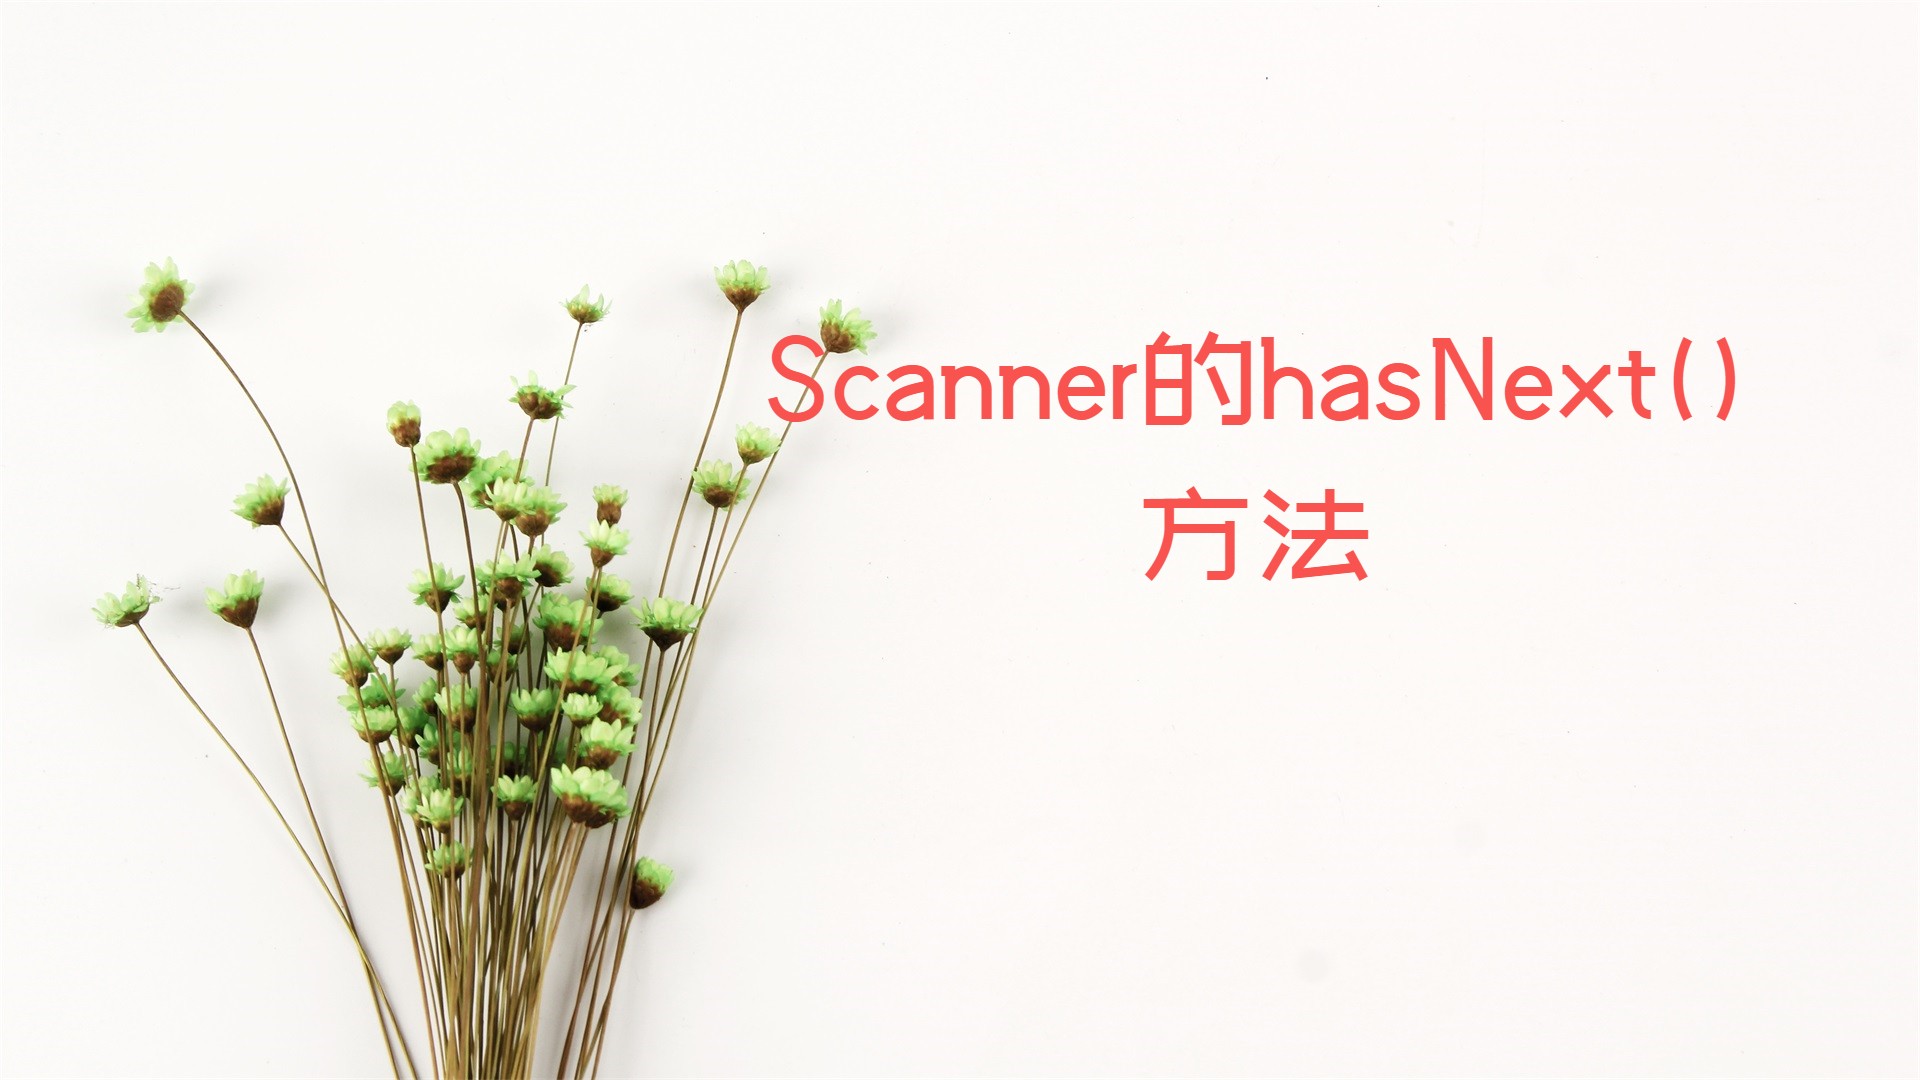 Scanner的hasNext()方法